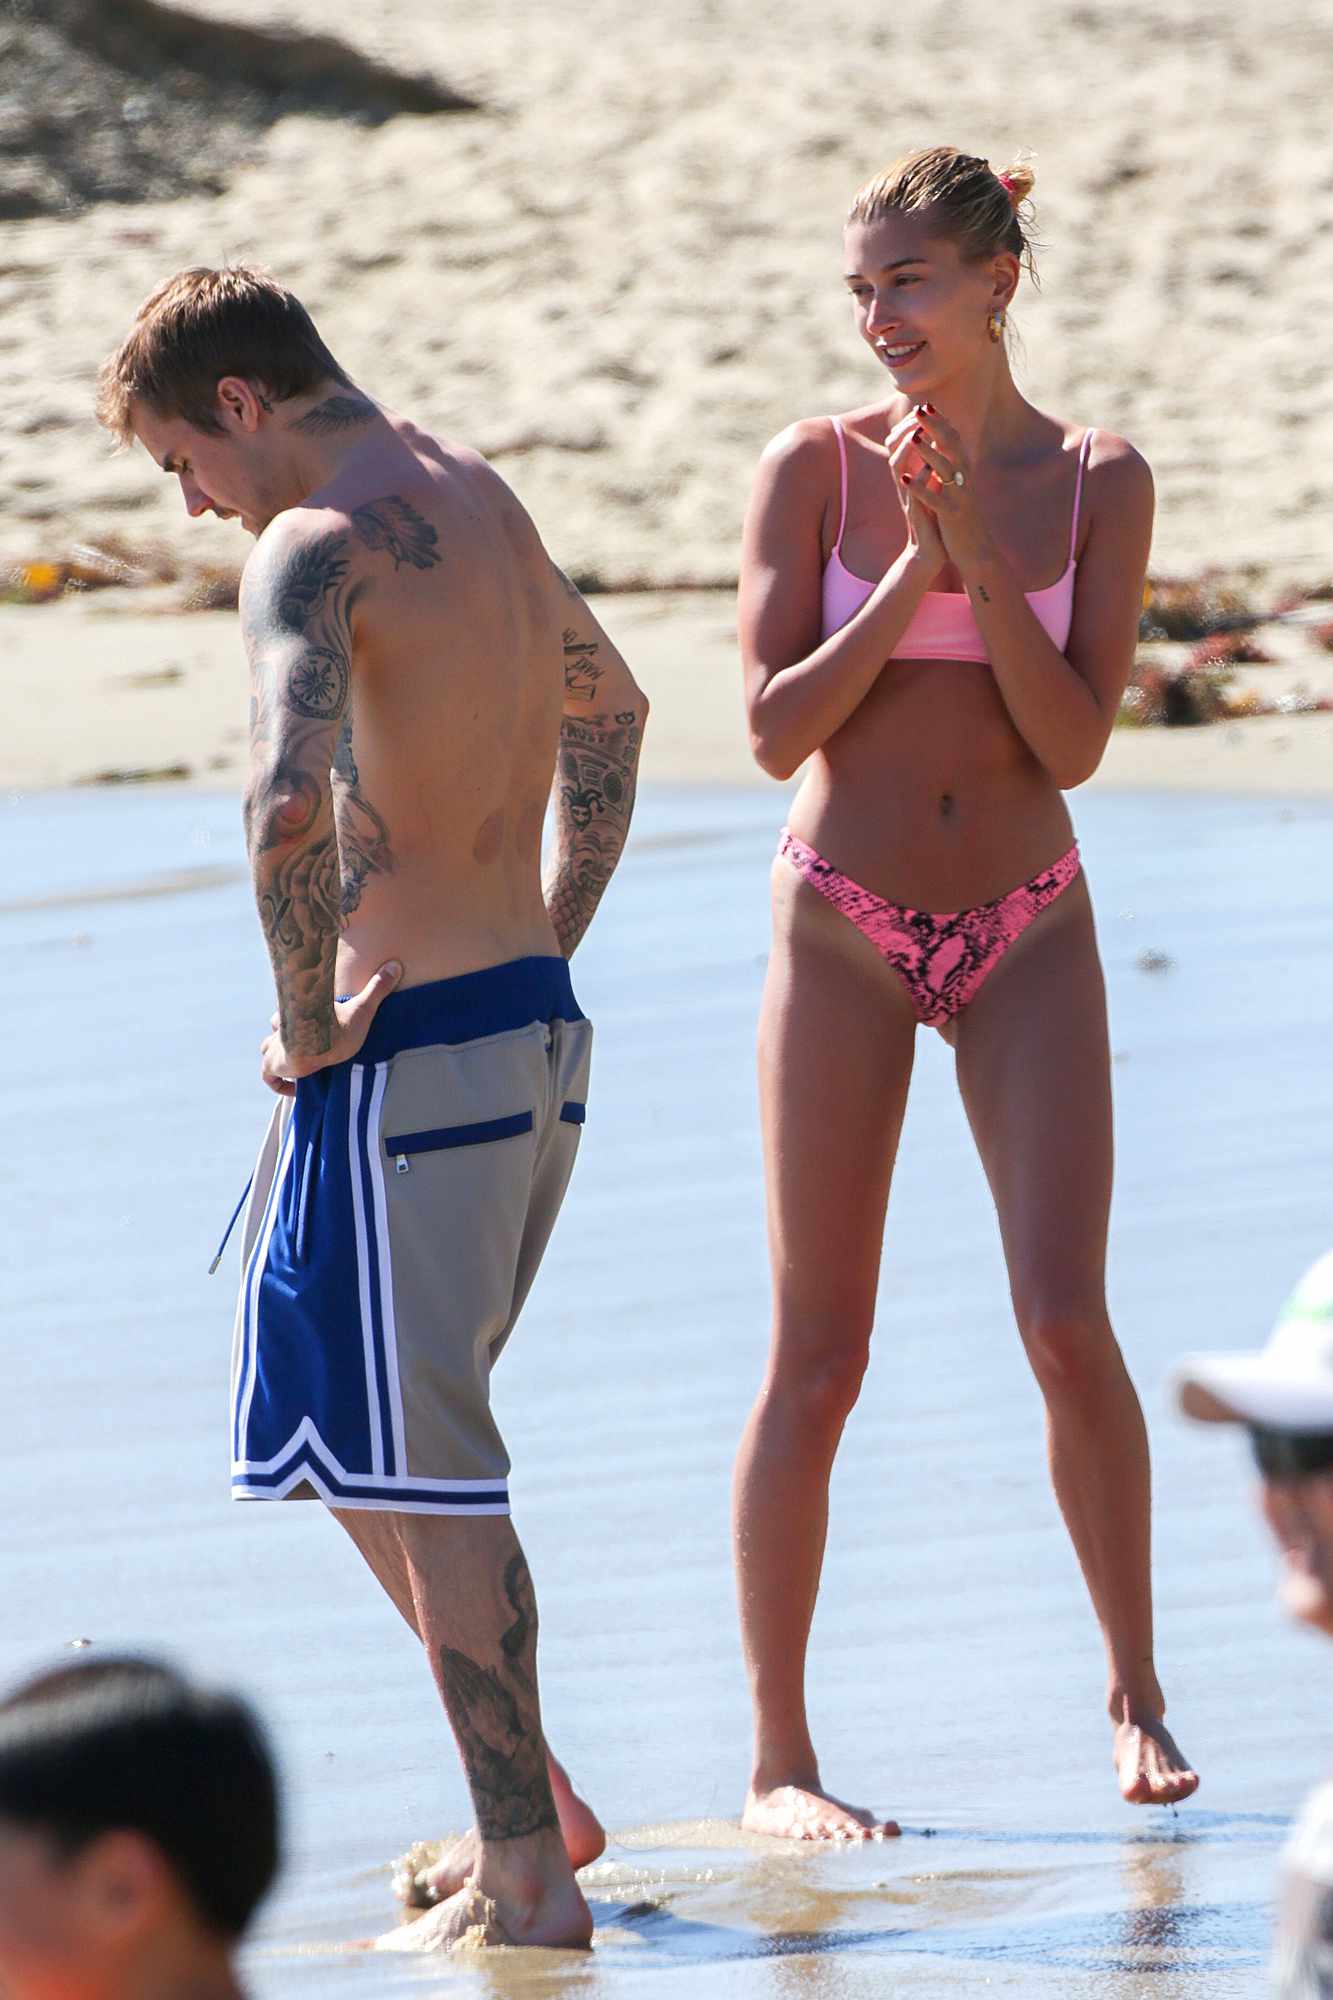 PREMIUM EXCLUSIVE Justin Bieber And Wife Hailey Baldwin Rekindle Their Romance At The Beach